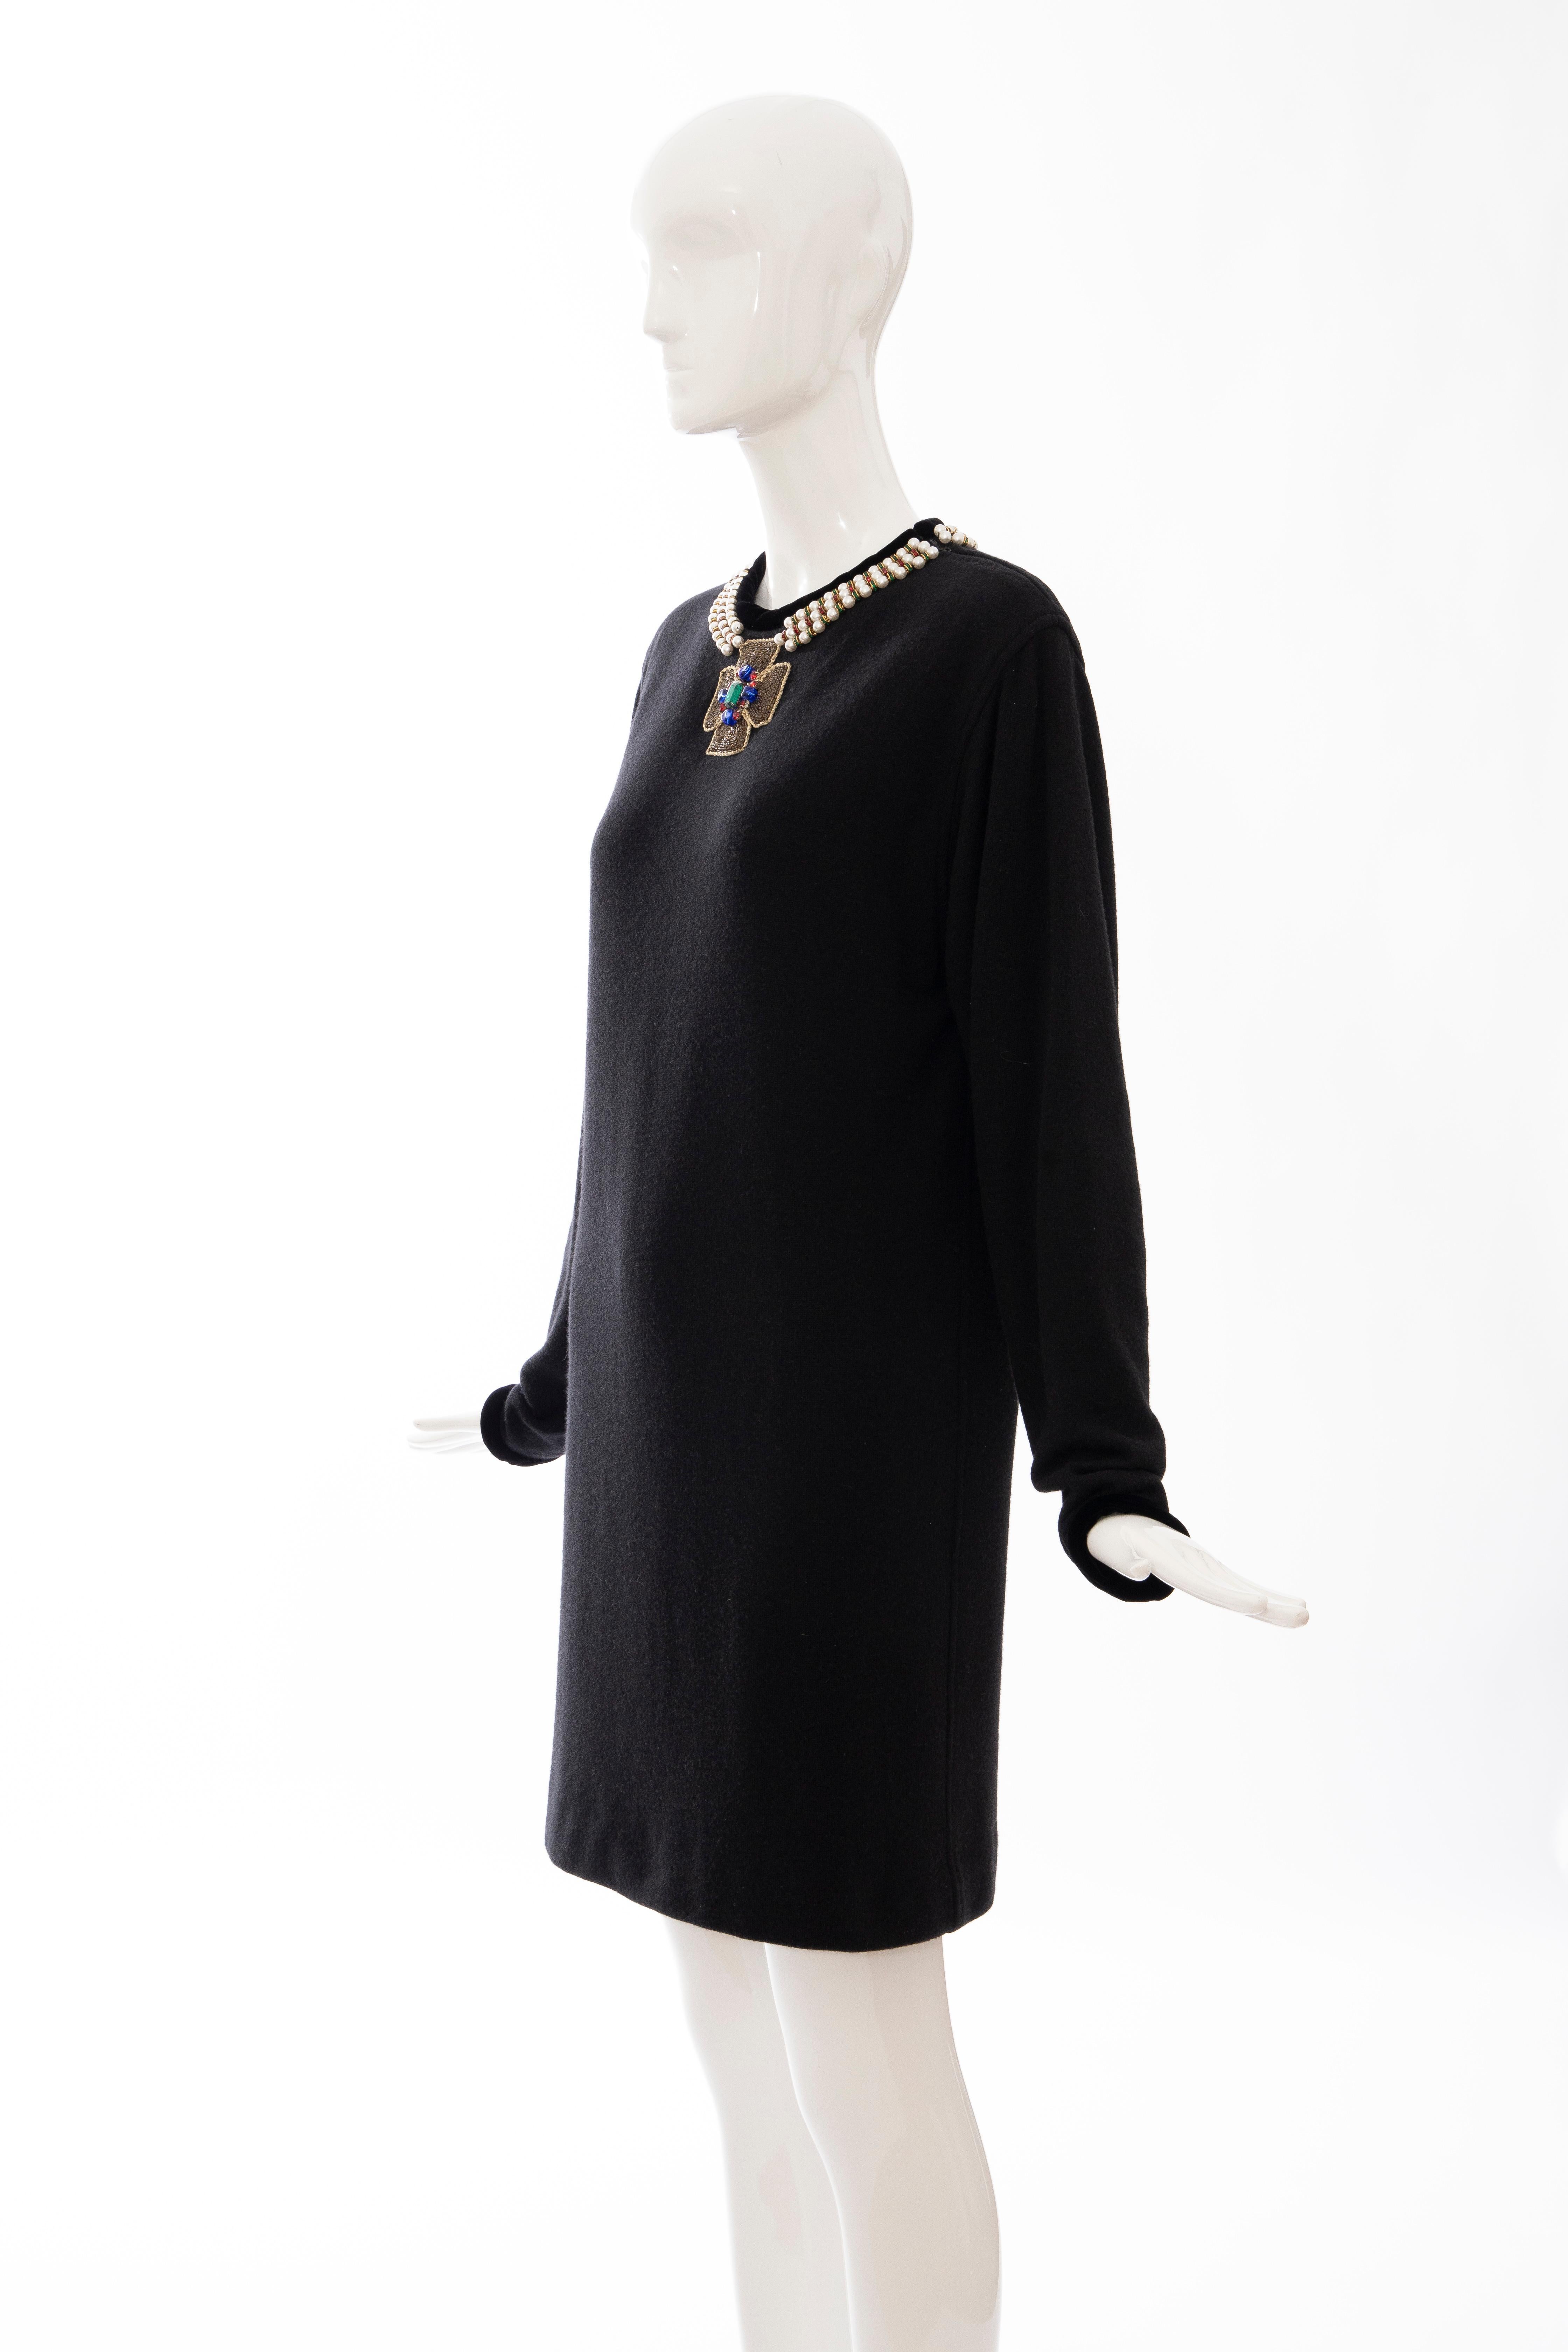 Oscar de la Renta Runway Black Embroidered Neckline Sweater Dress, Fall 1984 For Sale 6